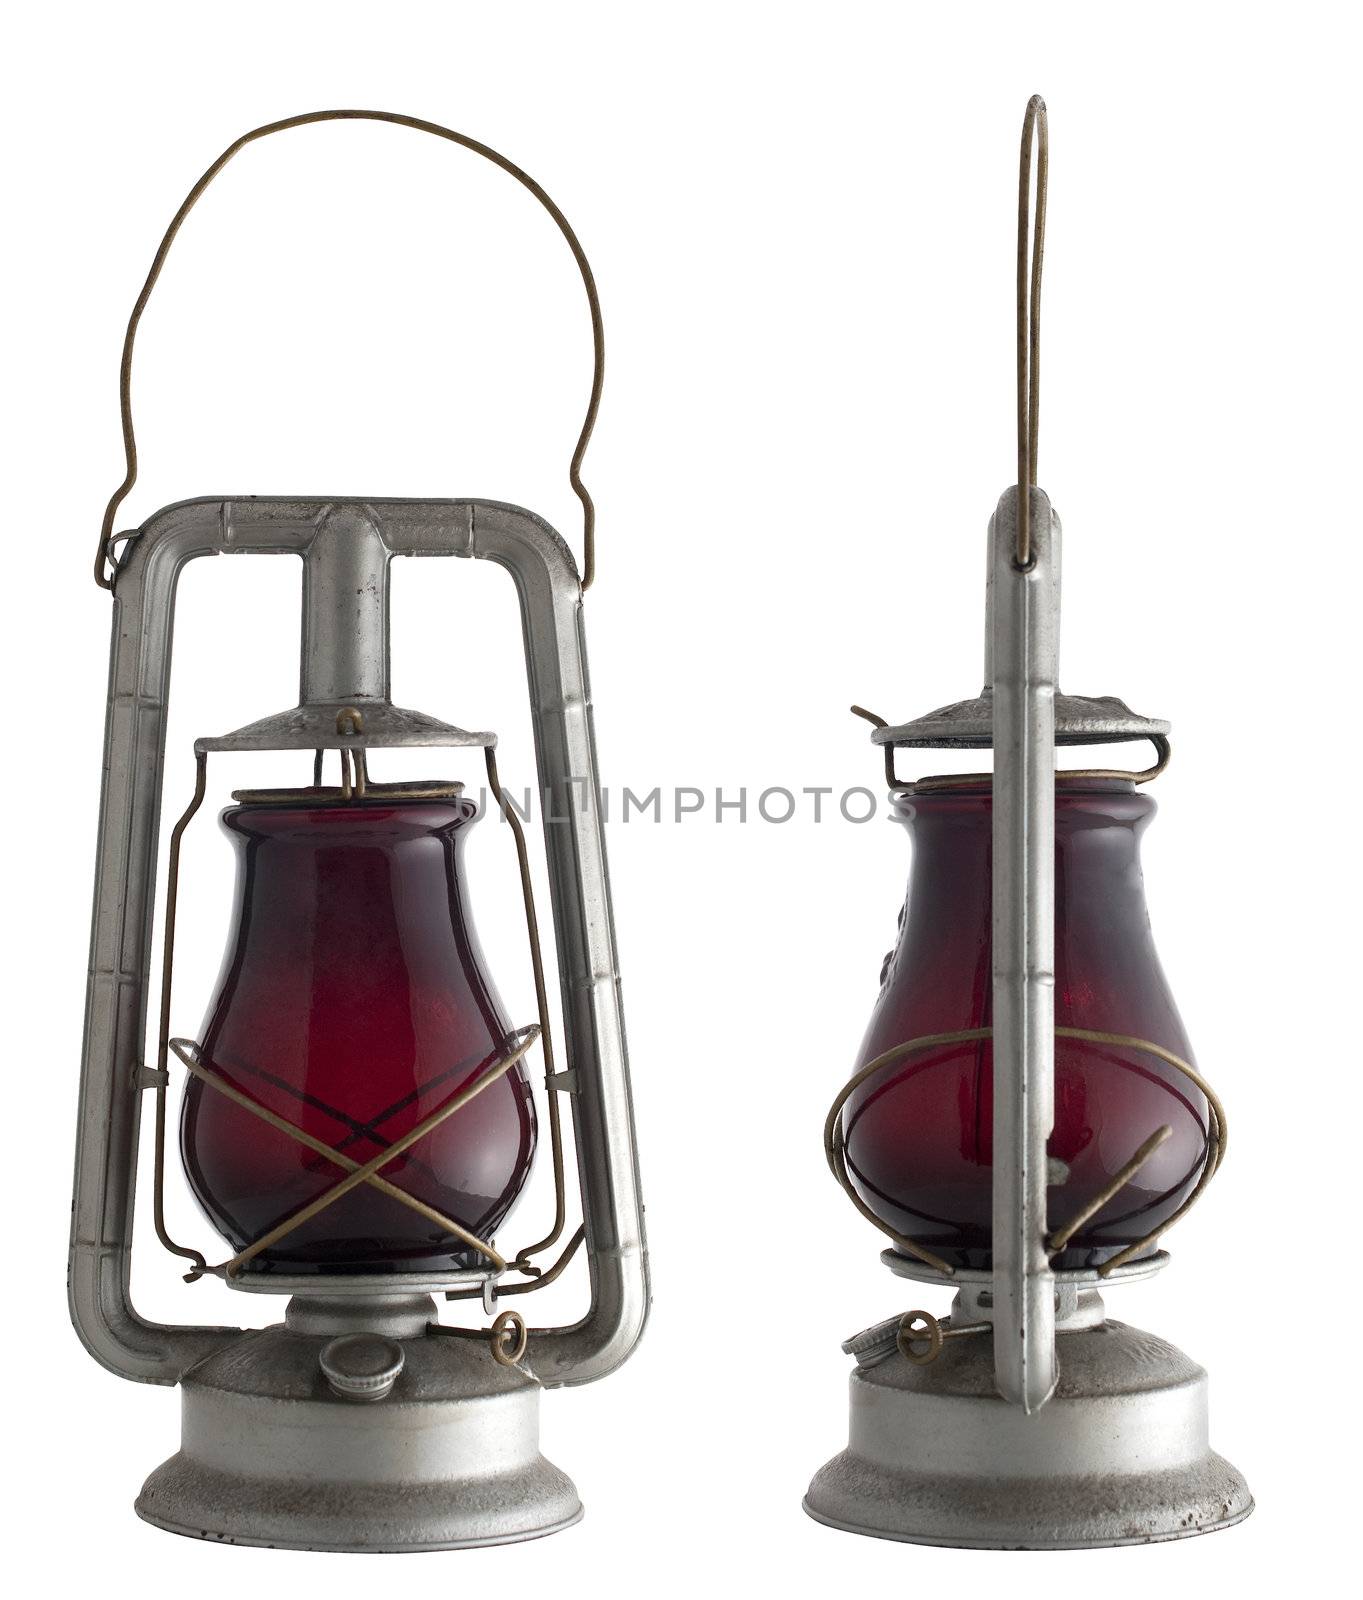 Oil lamp by homydesign